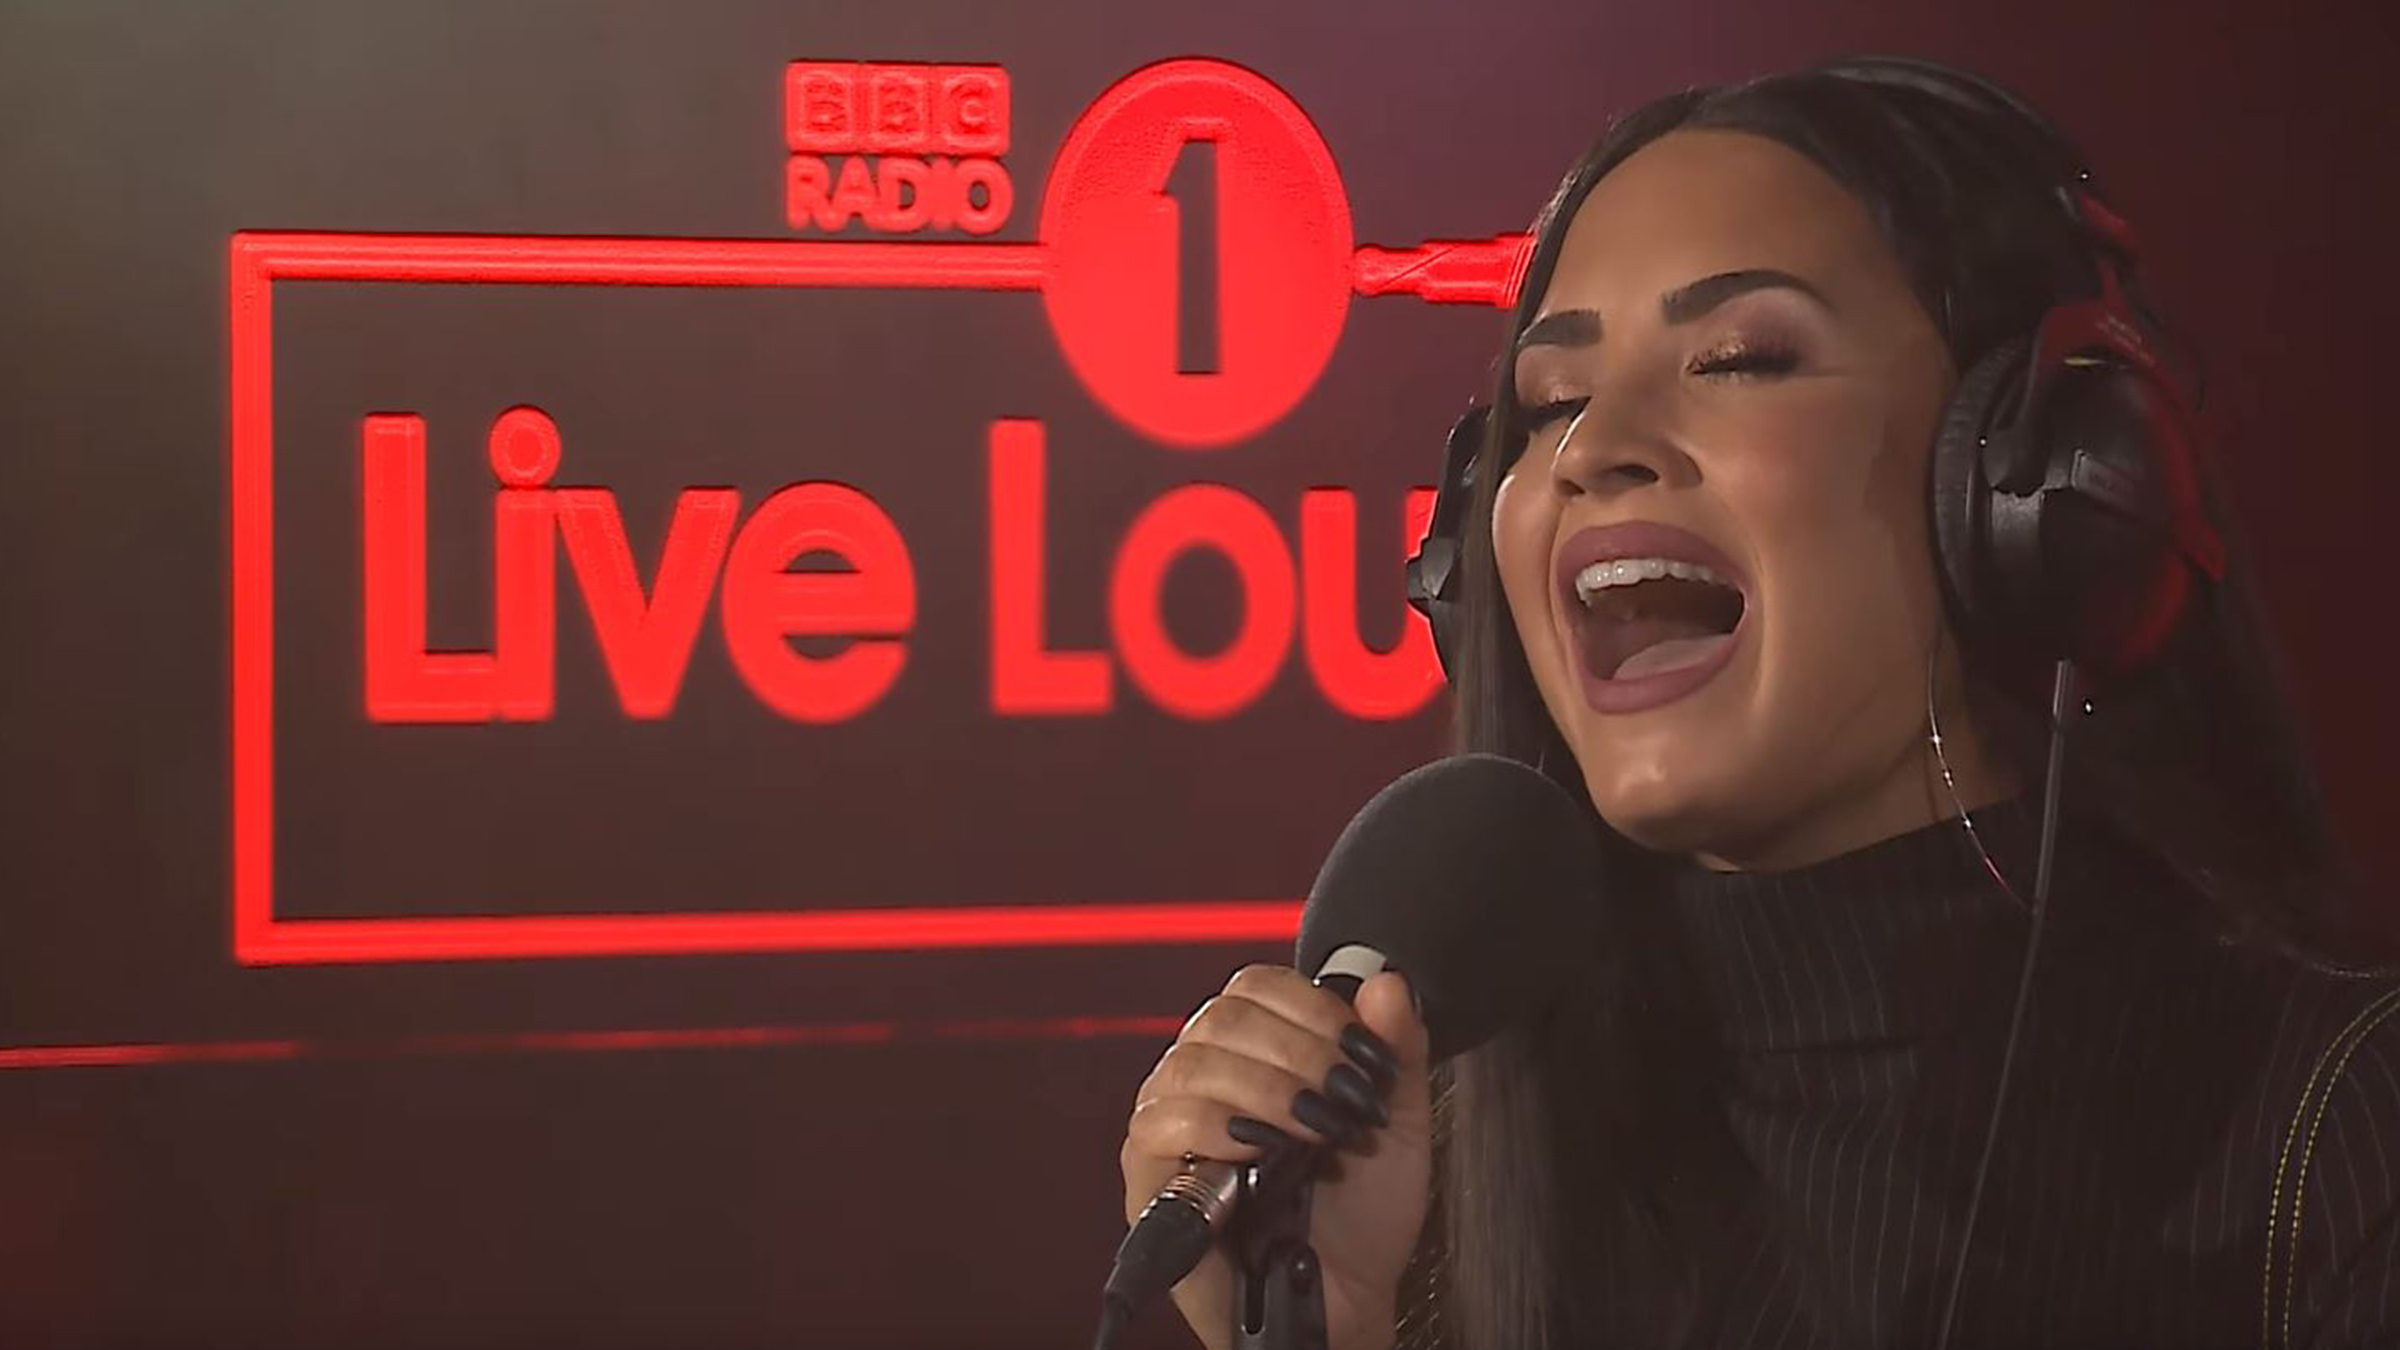 Gewaagd! Demi Lovato covert 'Too Good At Goodbyes' bij BBC Radio 1! - Qmusic